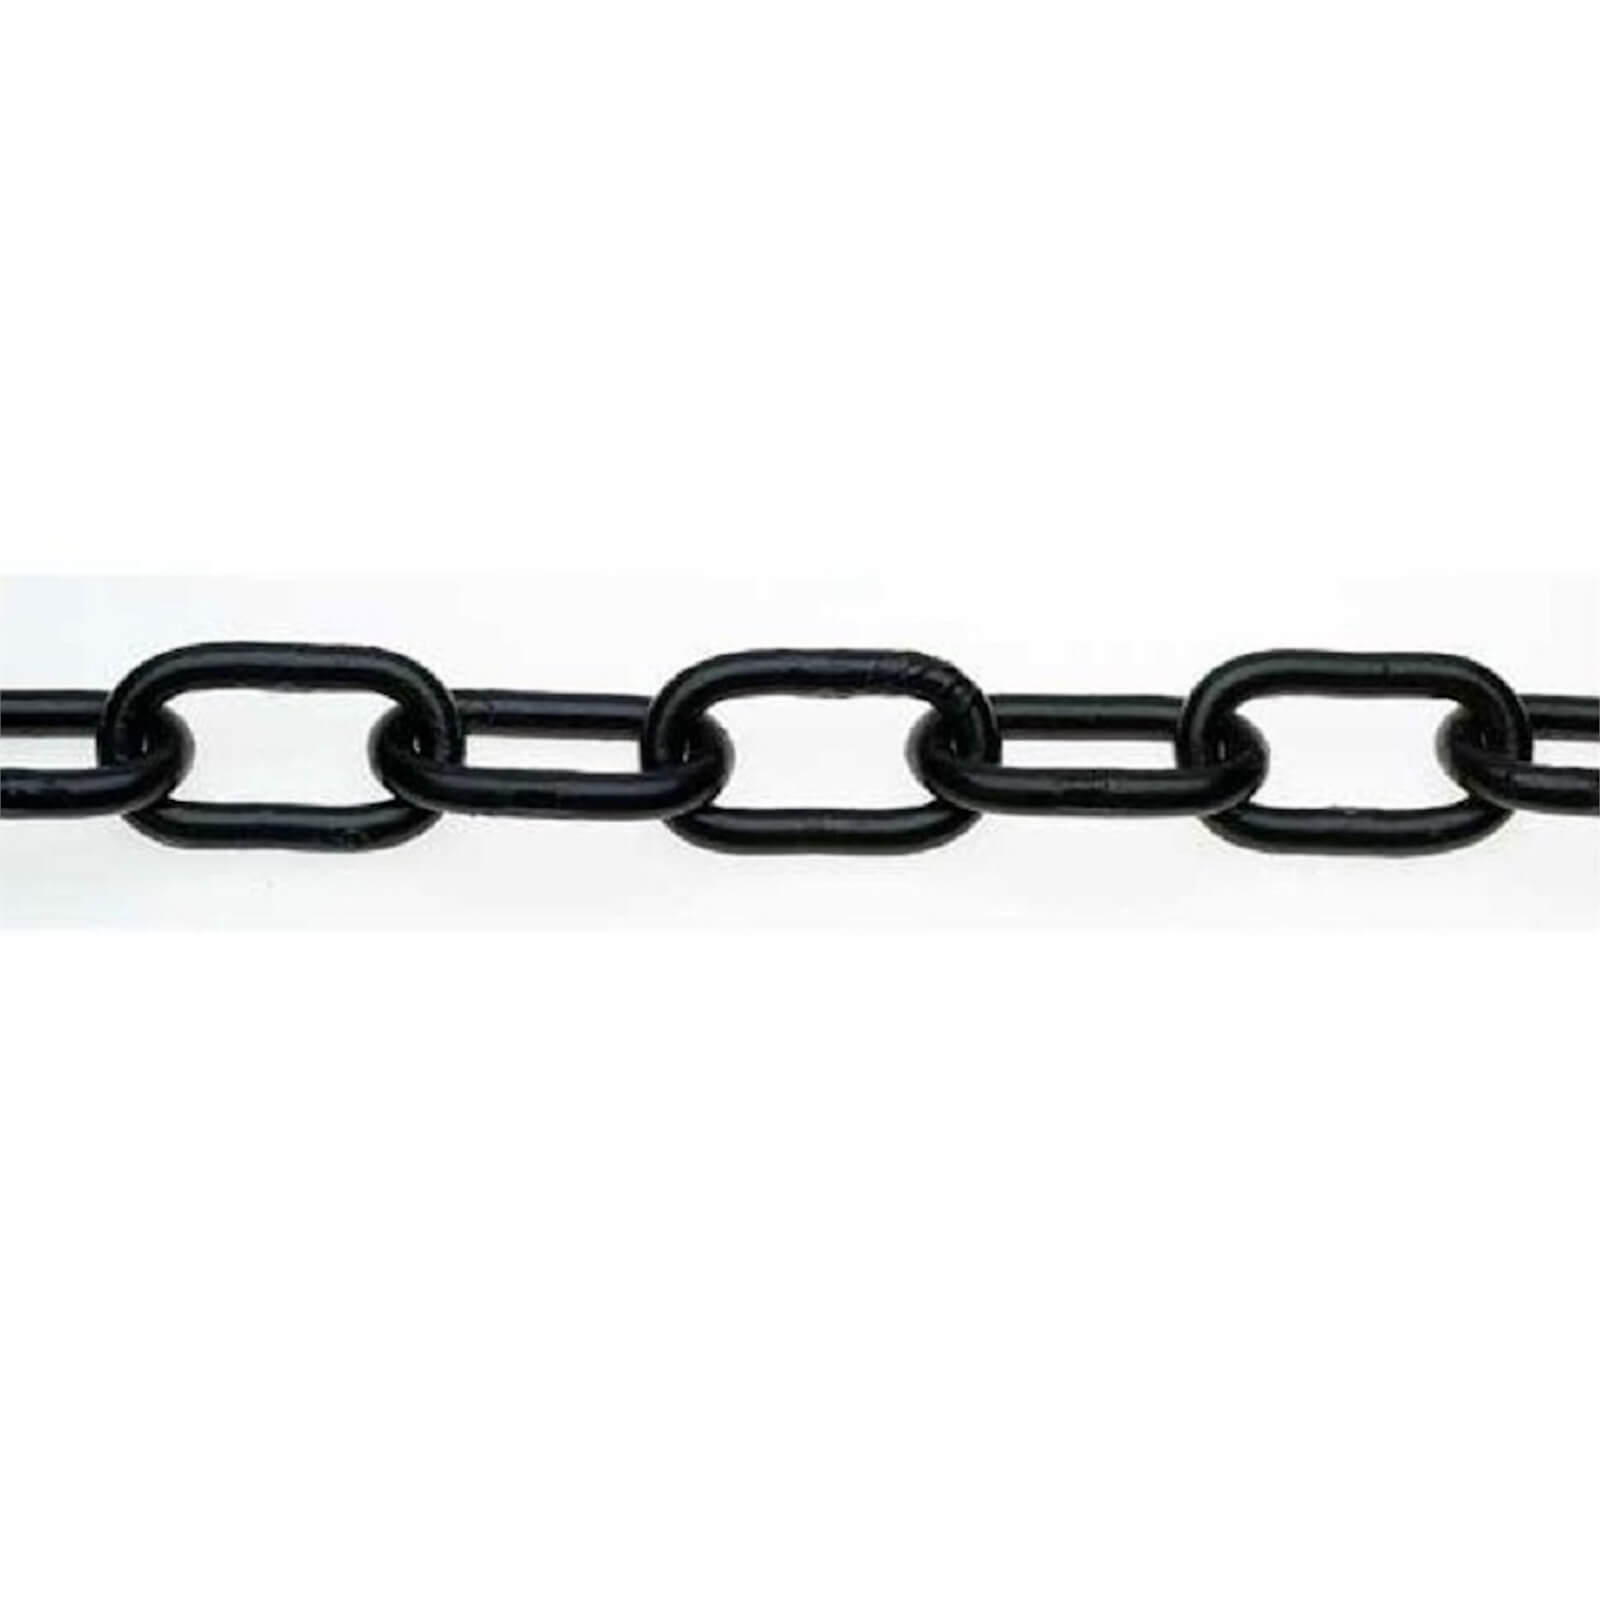 Per Metre Medium Link Chain - Black - 3mm x 1m